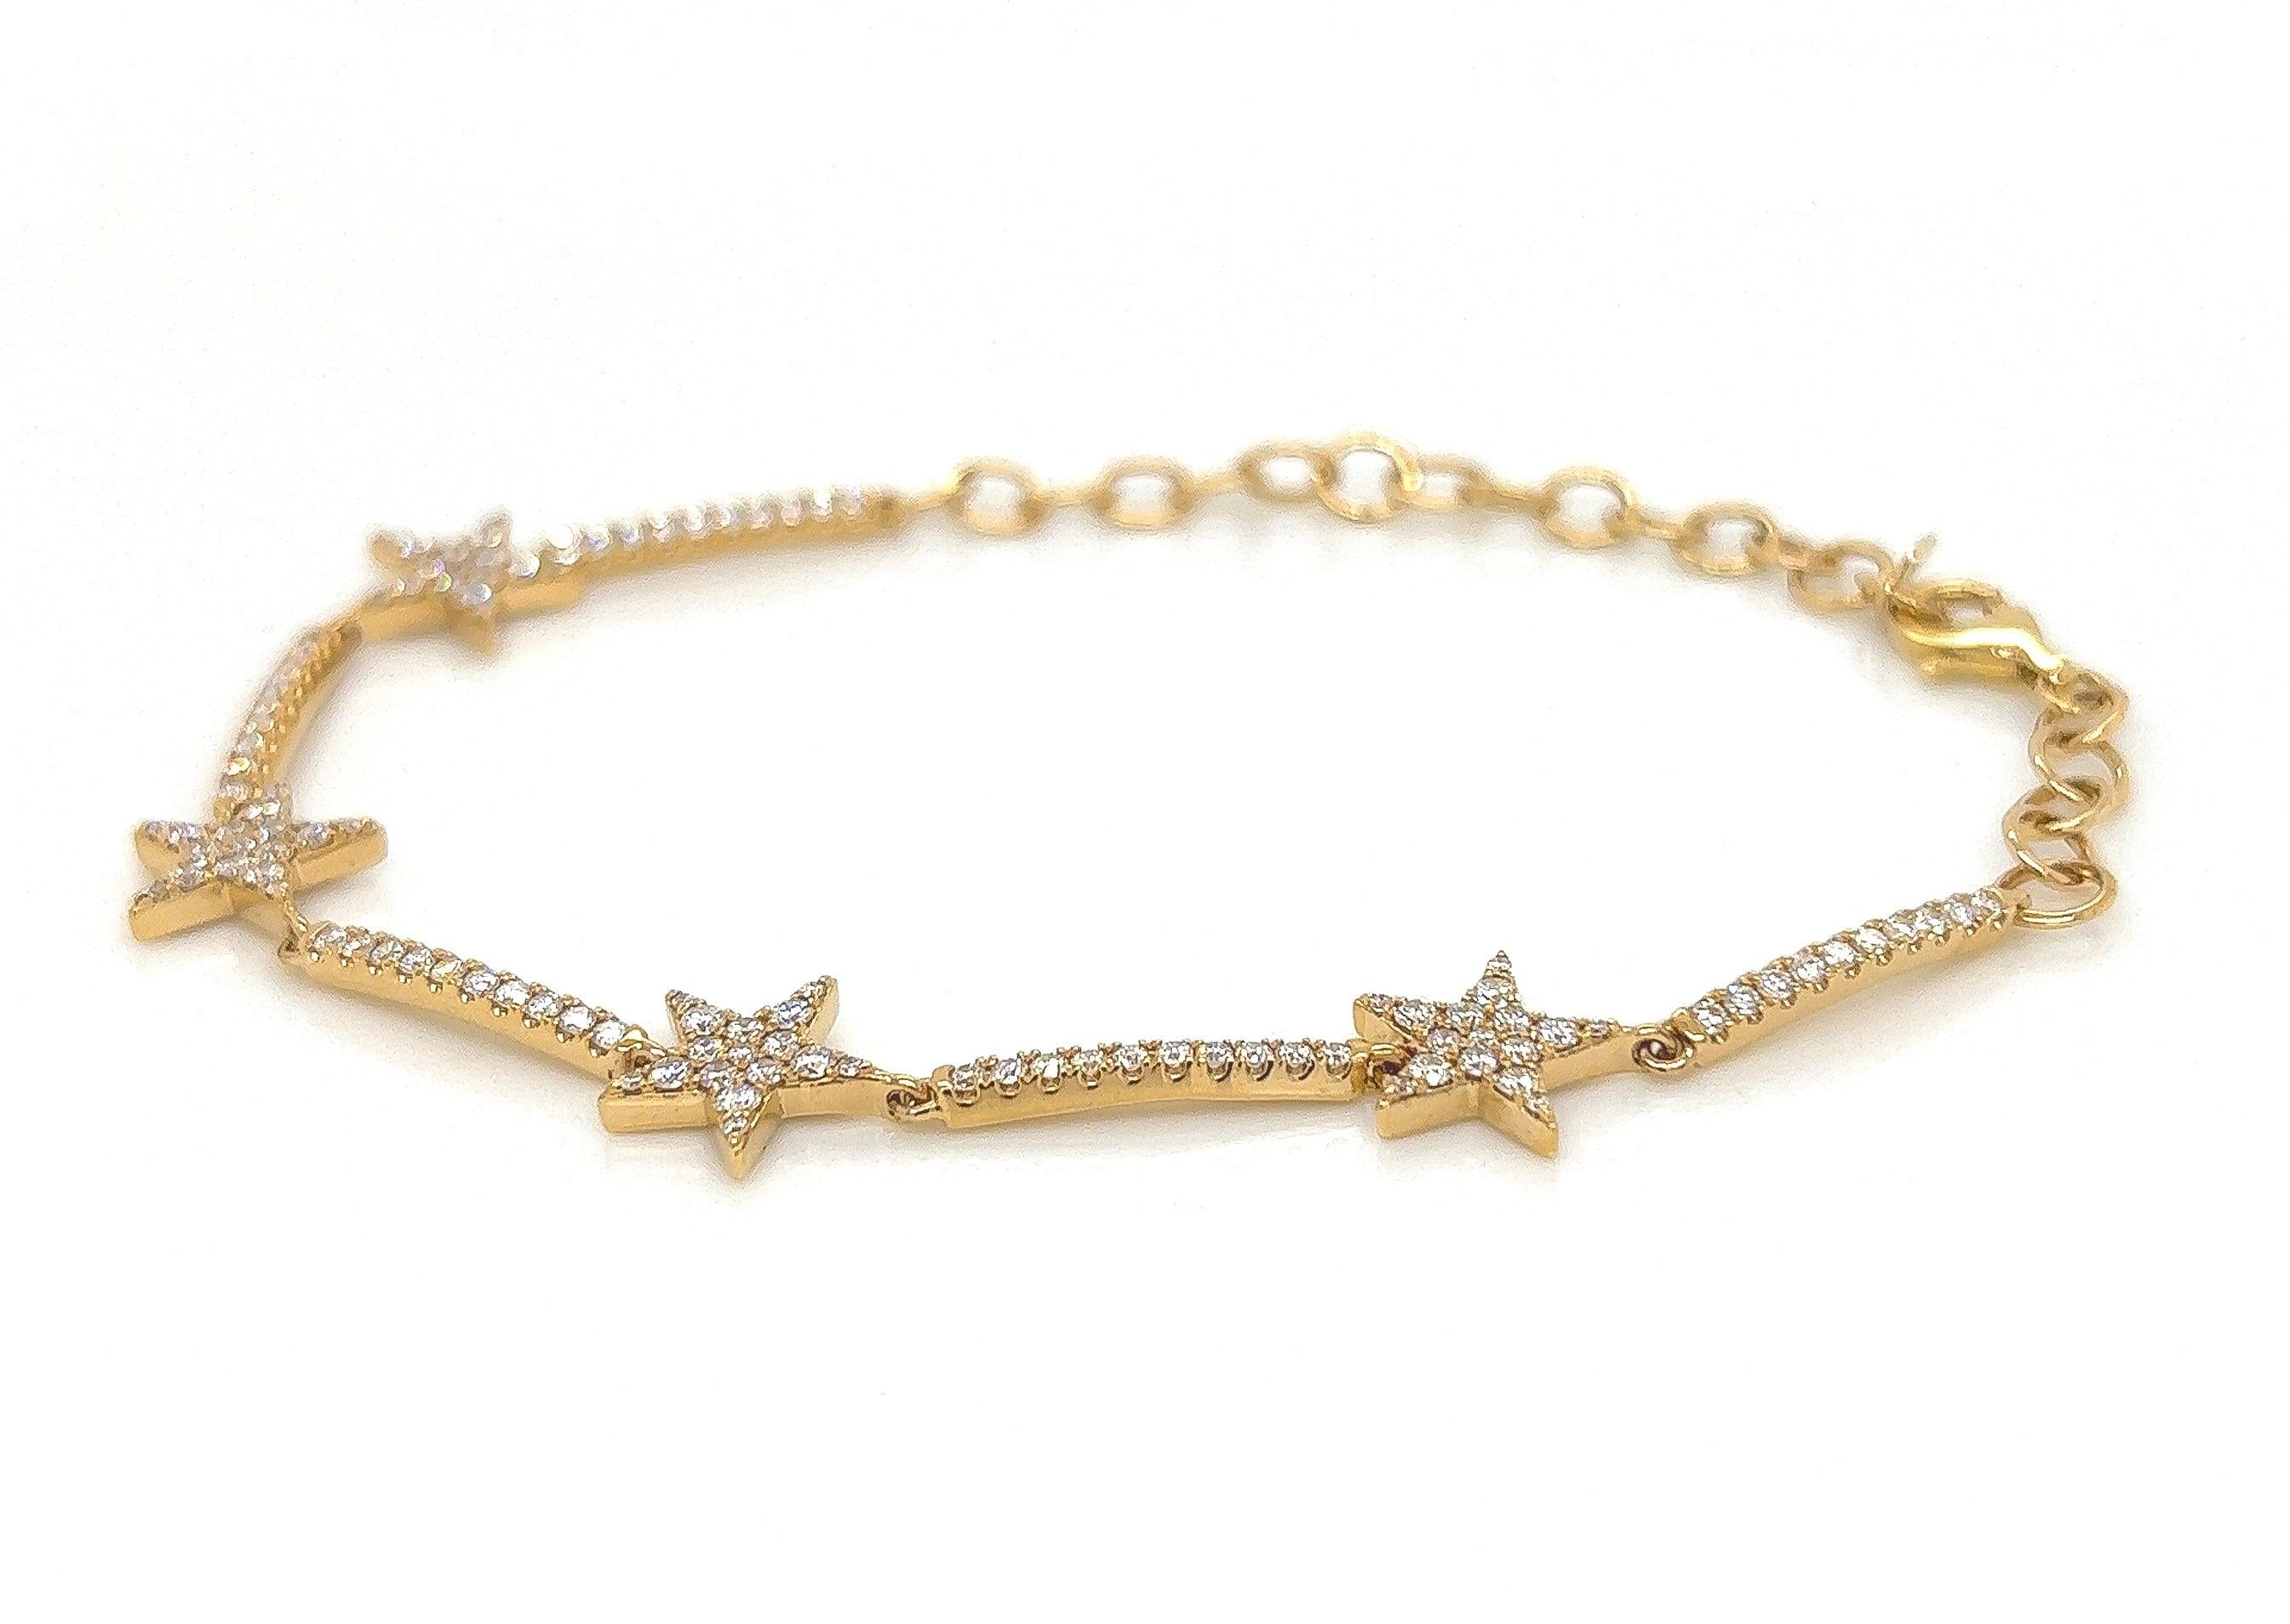 1.02 Carat Star Diamond Bracelet in 14K Yellow Gold

-Metal Type: 14K Yellow Gold
-Gemstone: Diamonds, 1.02 total carat
-Size: 5.5 to 7.25 inches

Handmade in New York City.